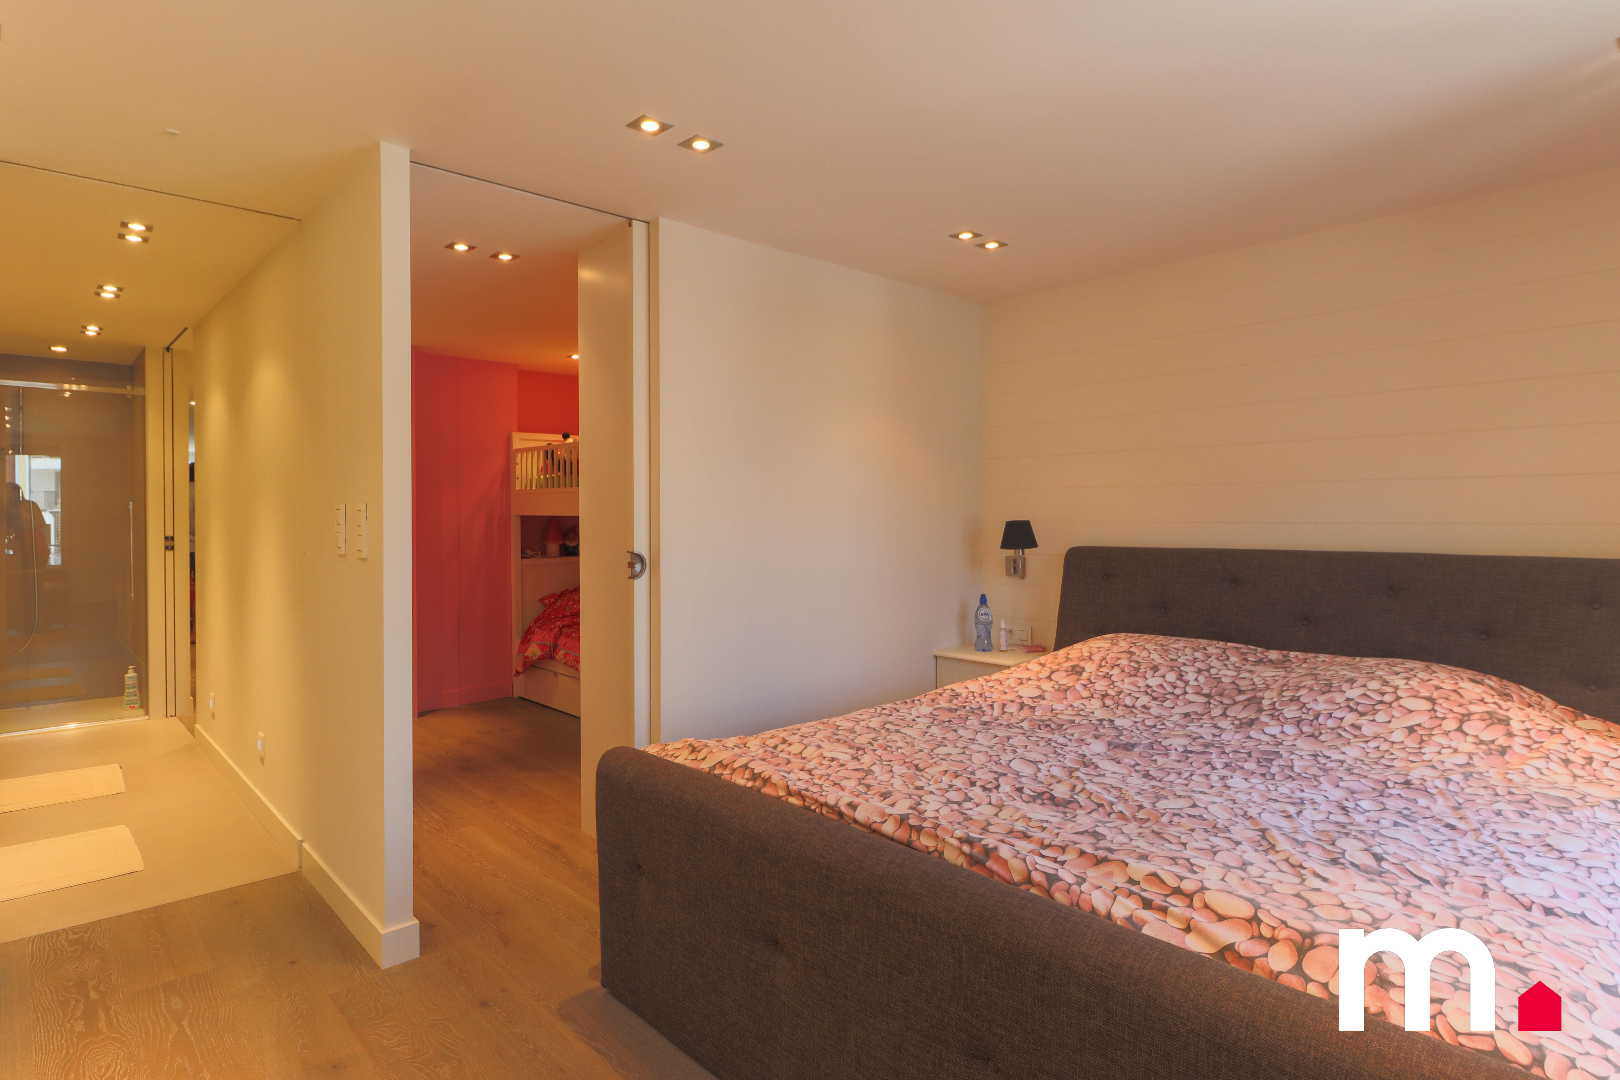 2 slaapkamer appartement op topligging in Knokke!